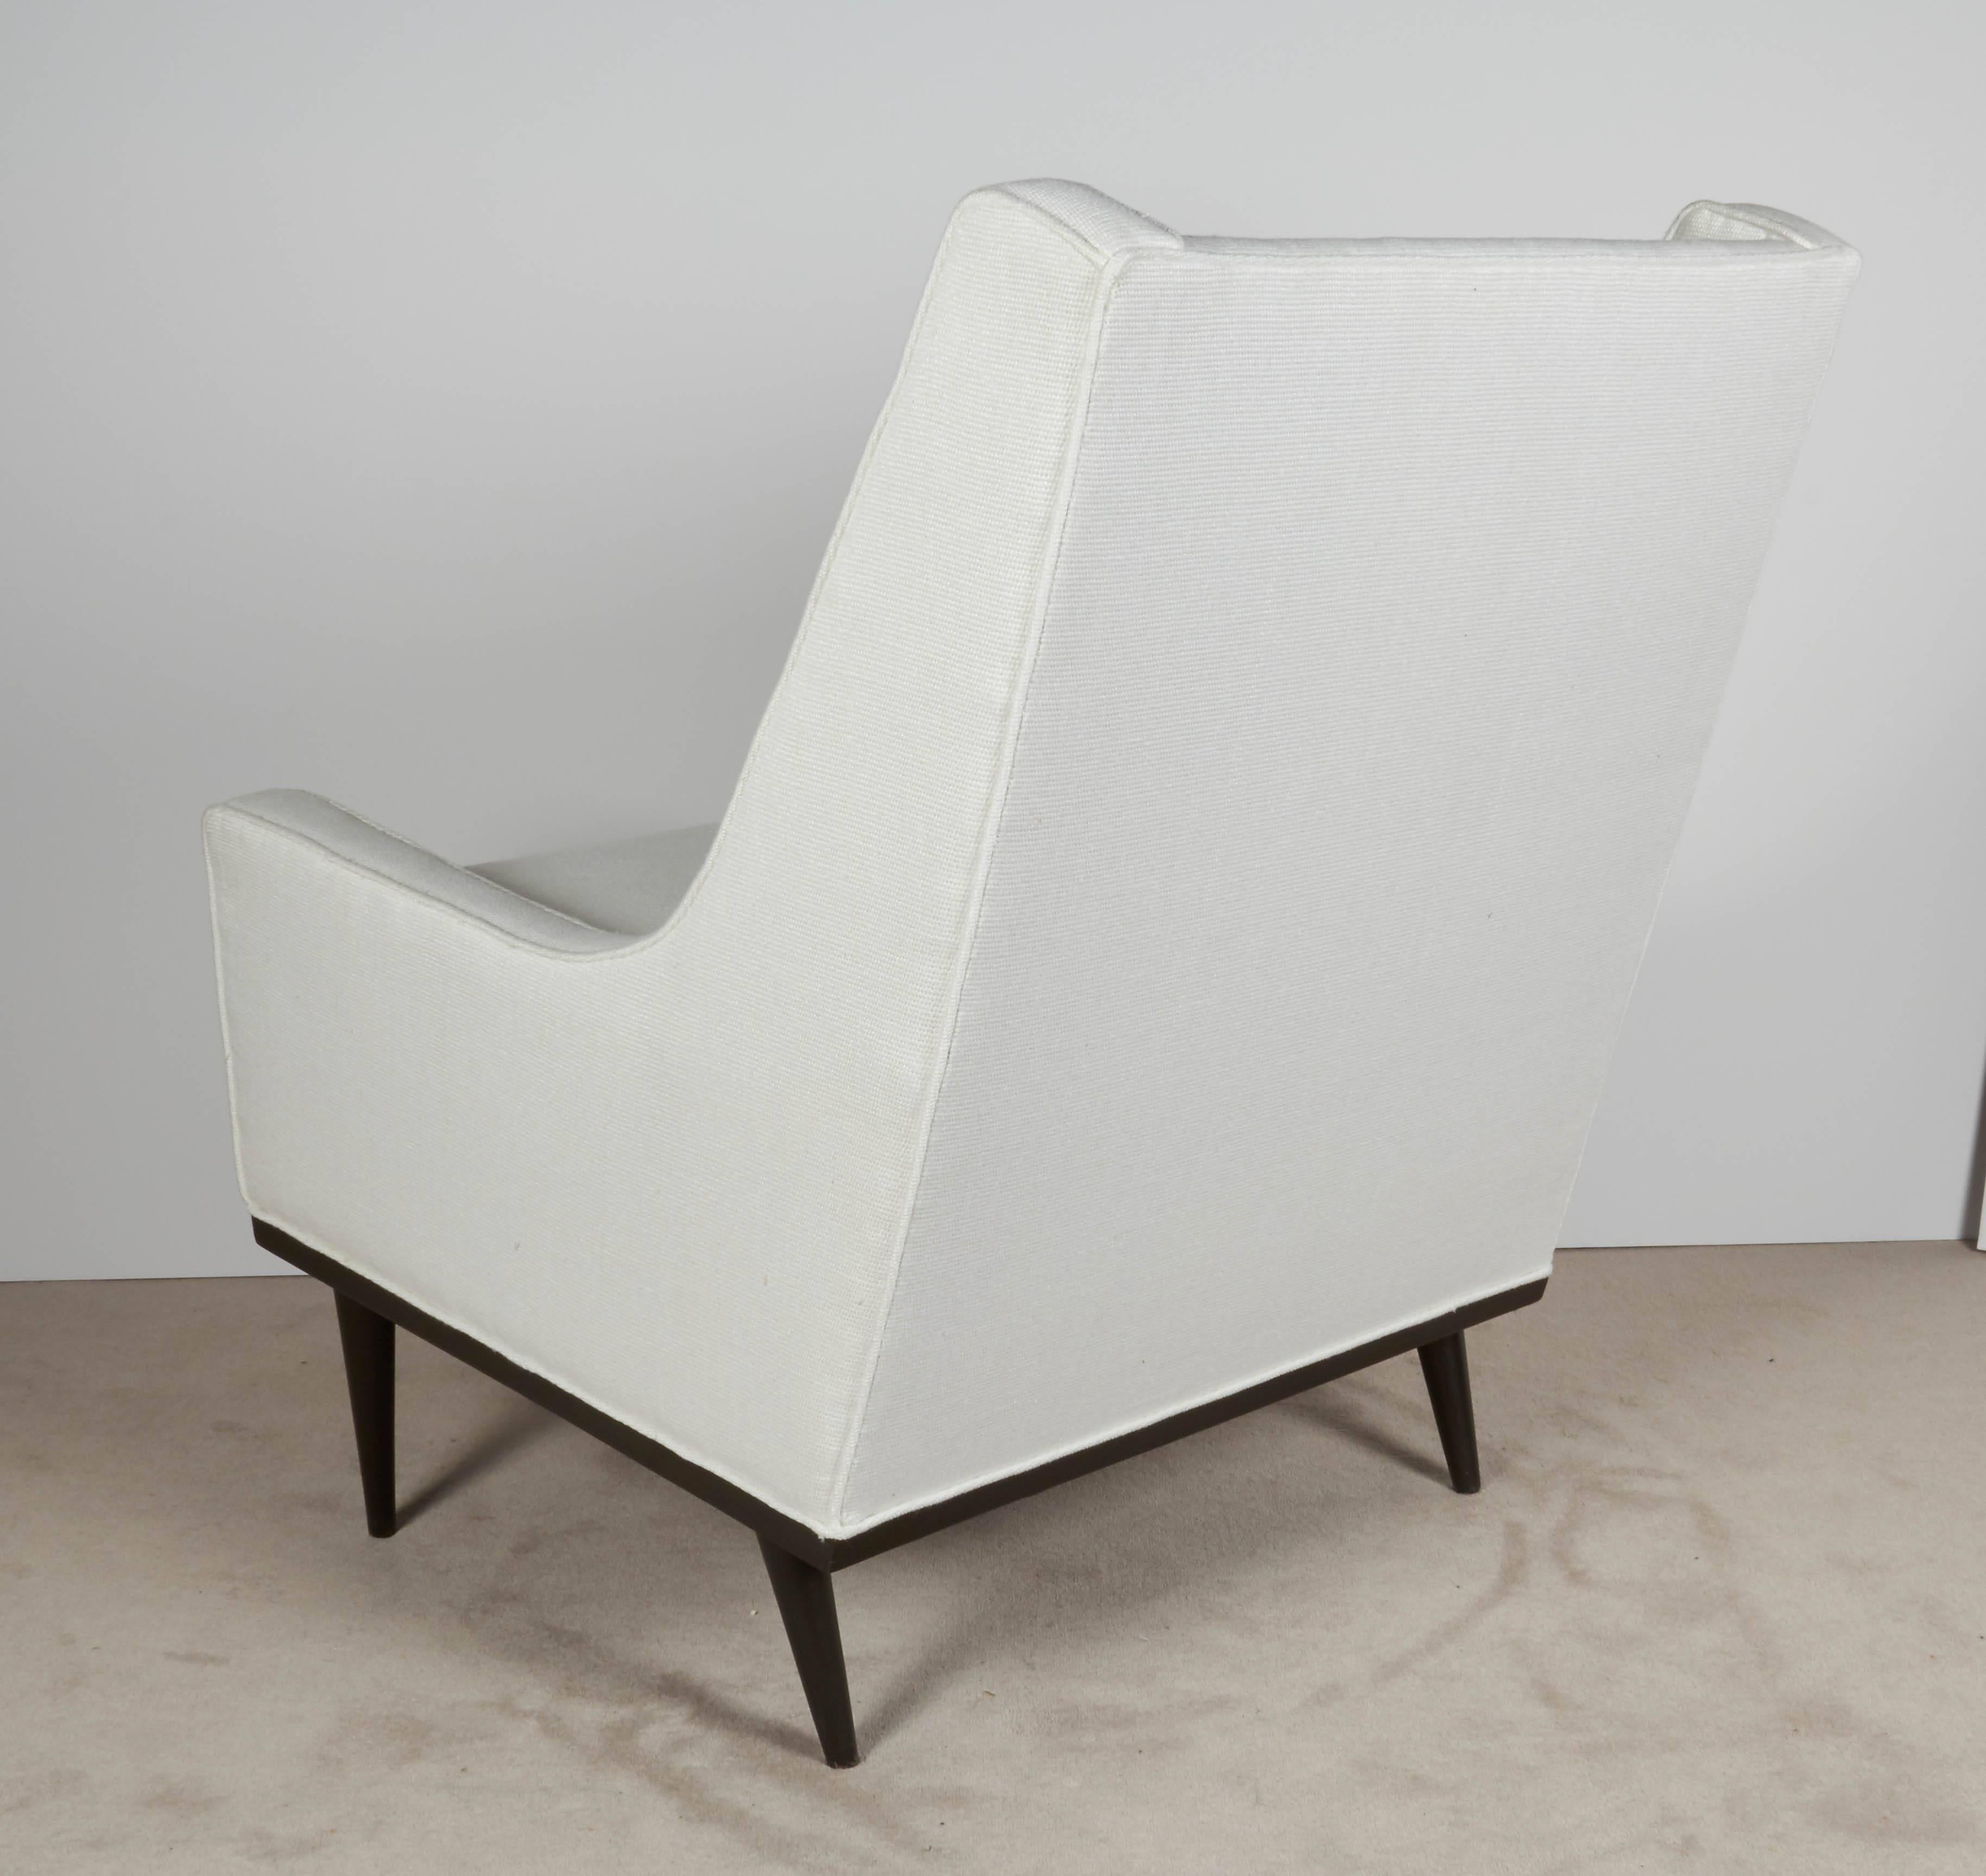 Mid-20th Century Milo Baughman White Linen Lounge Chair for James Inc.